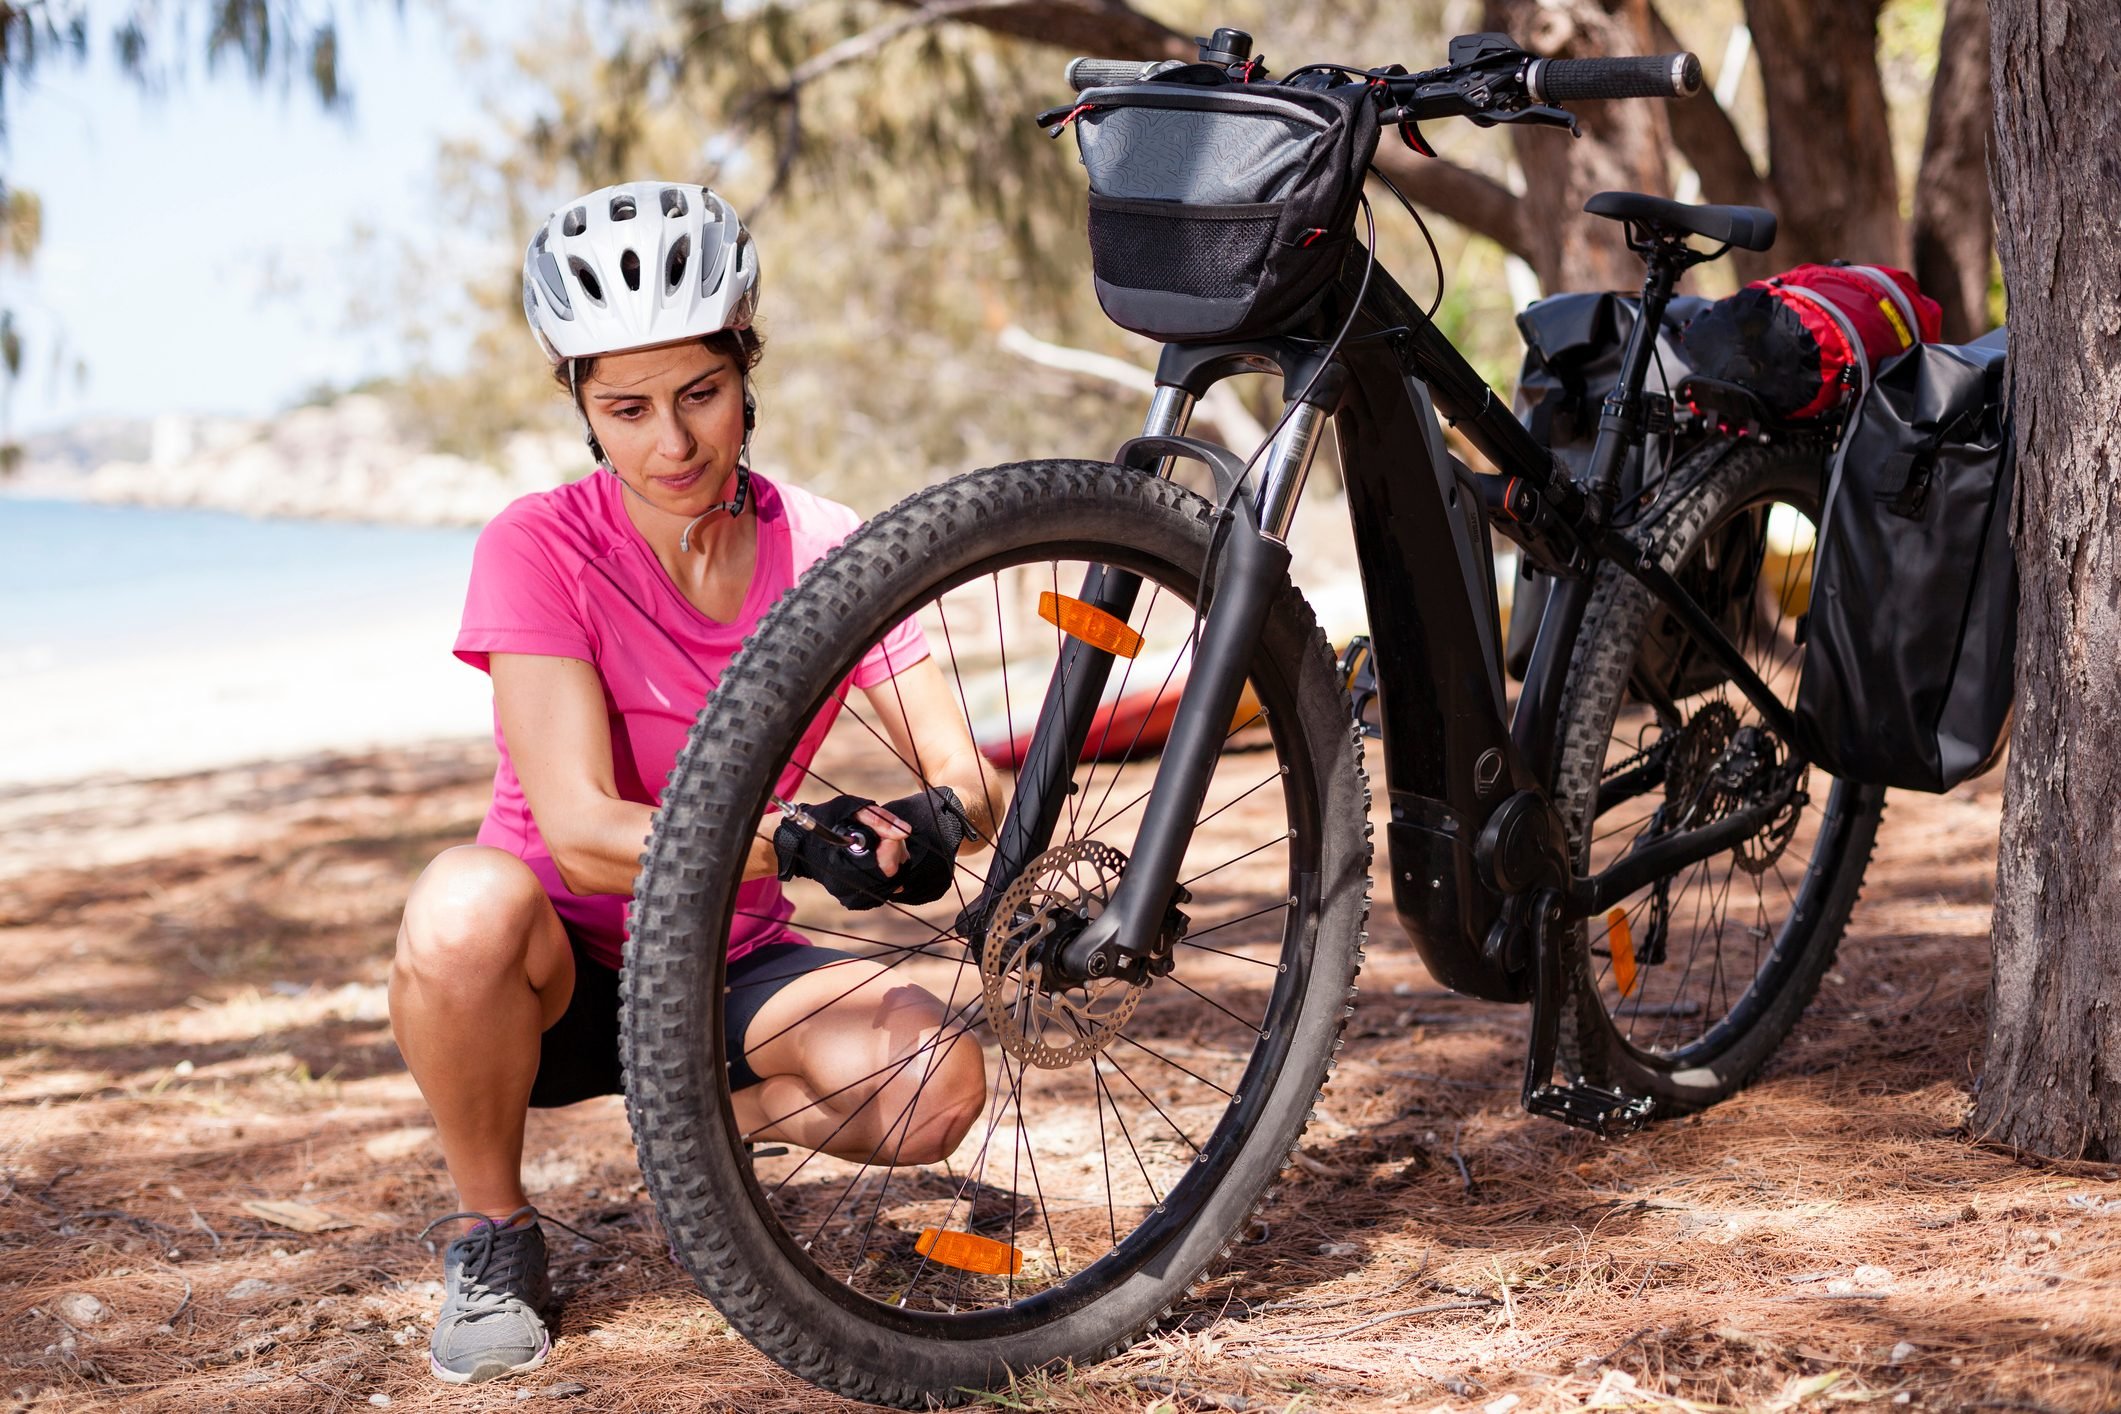 Solo Woman Bike-packing in Remote Australia